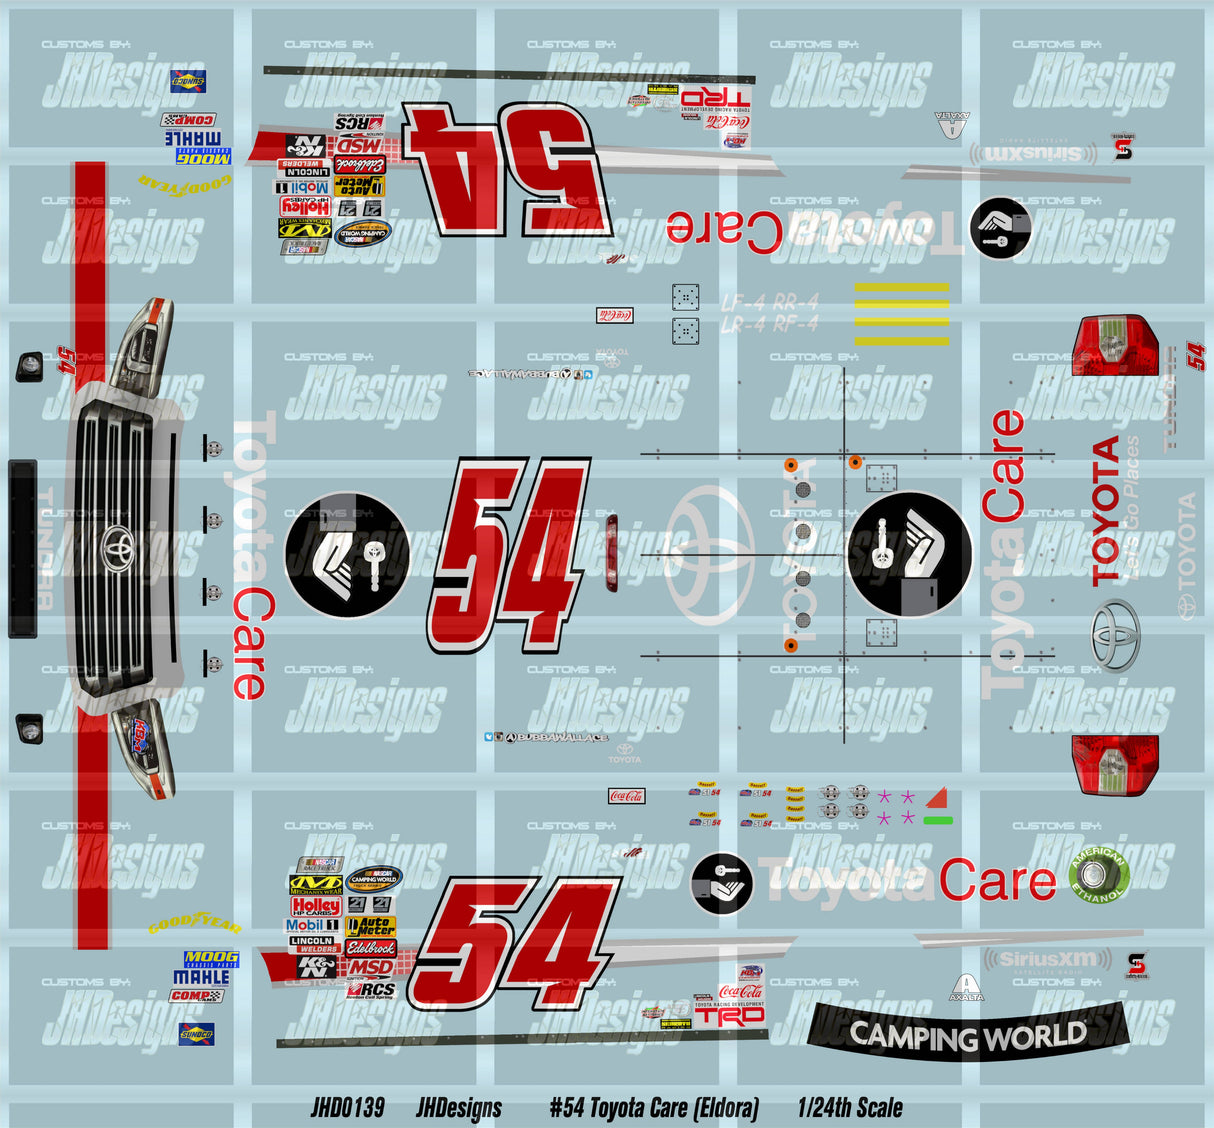 JH Designs Bubba Wallace 2014 CWTS #54 Toyota Care (Eldora) 1:24 Racecar Decal Set